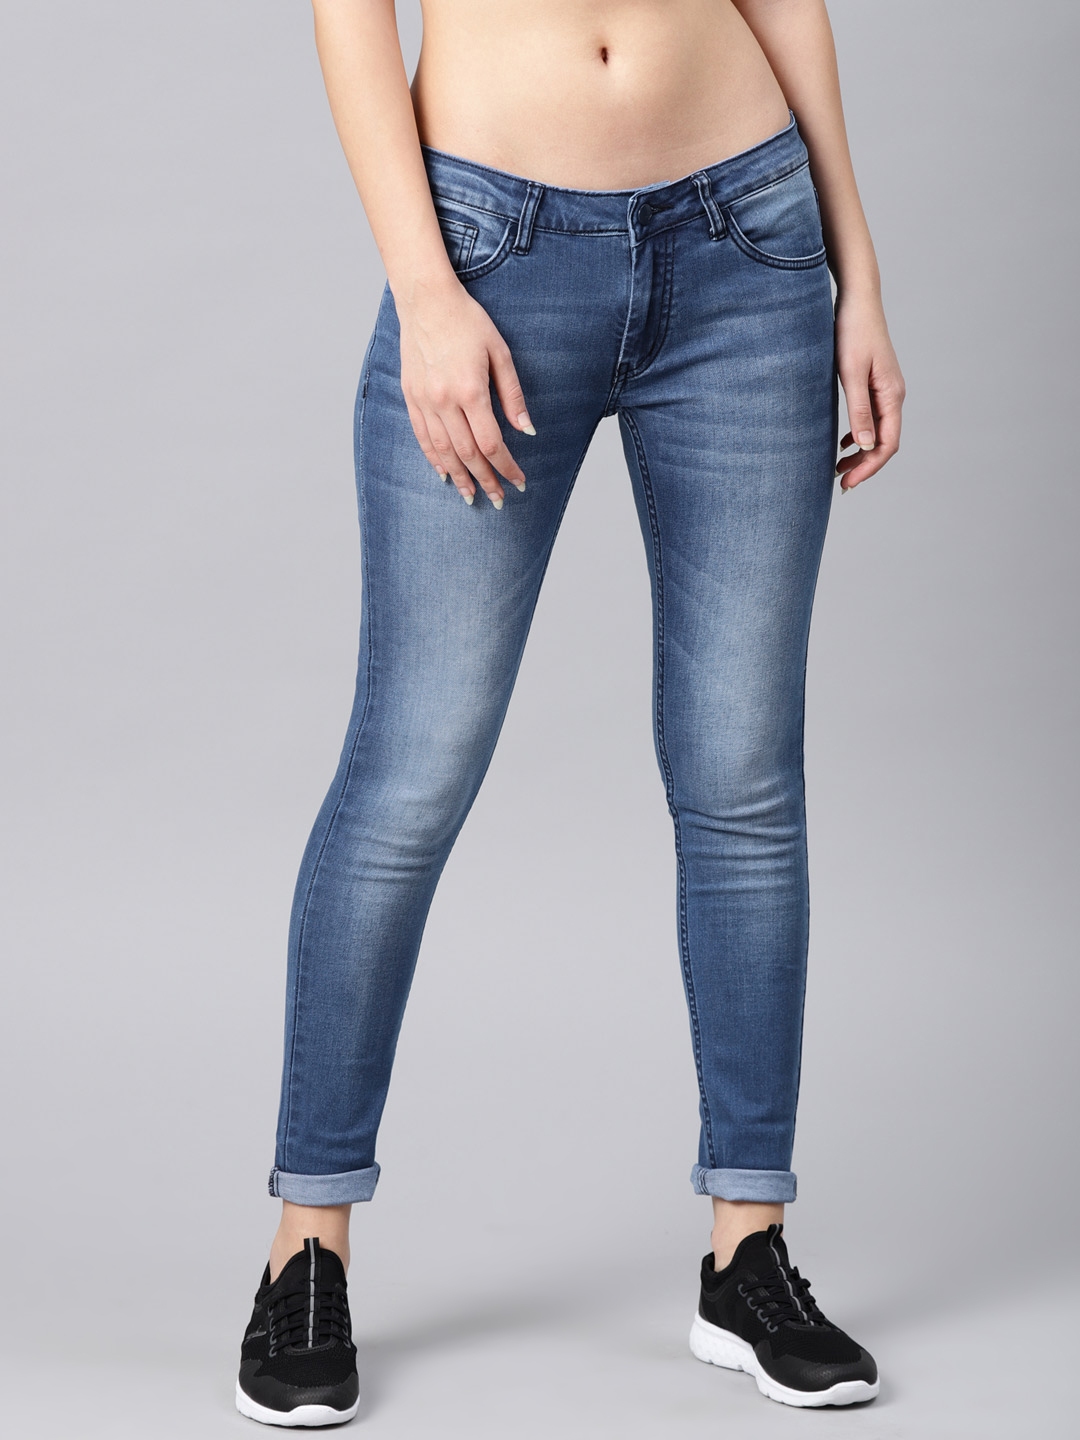 topless models in denim jeans egotastic allstars